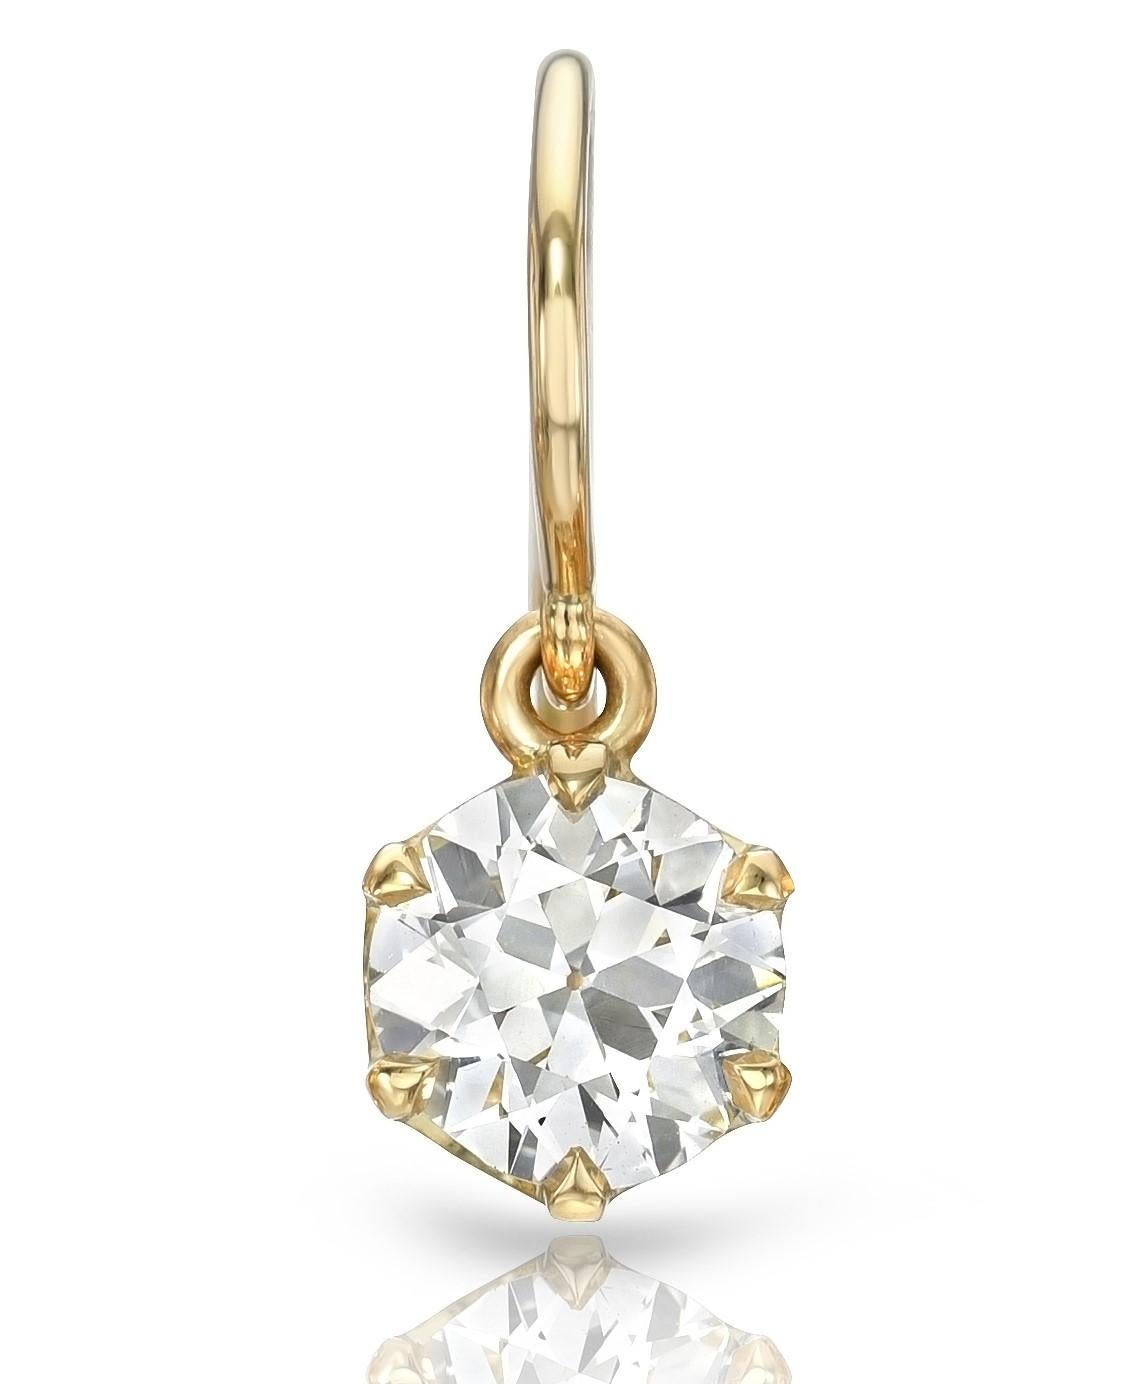 1.68ctw I-J/VS2 GIA certified old European cut diamonds prong set in handcrafted 18K yellow gold drop earrings. 